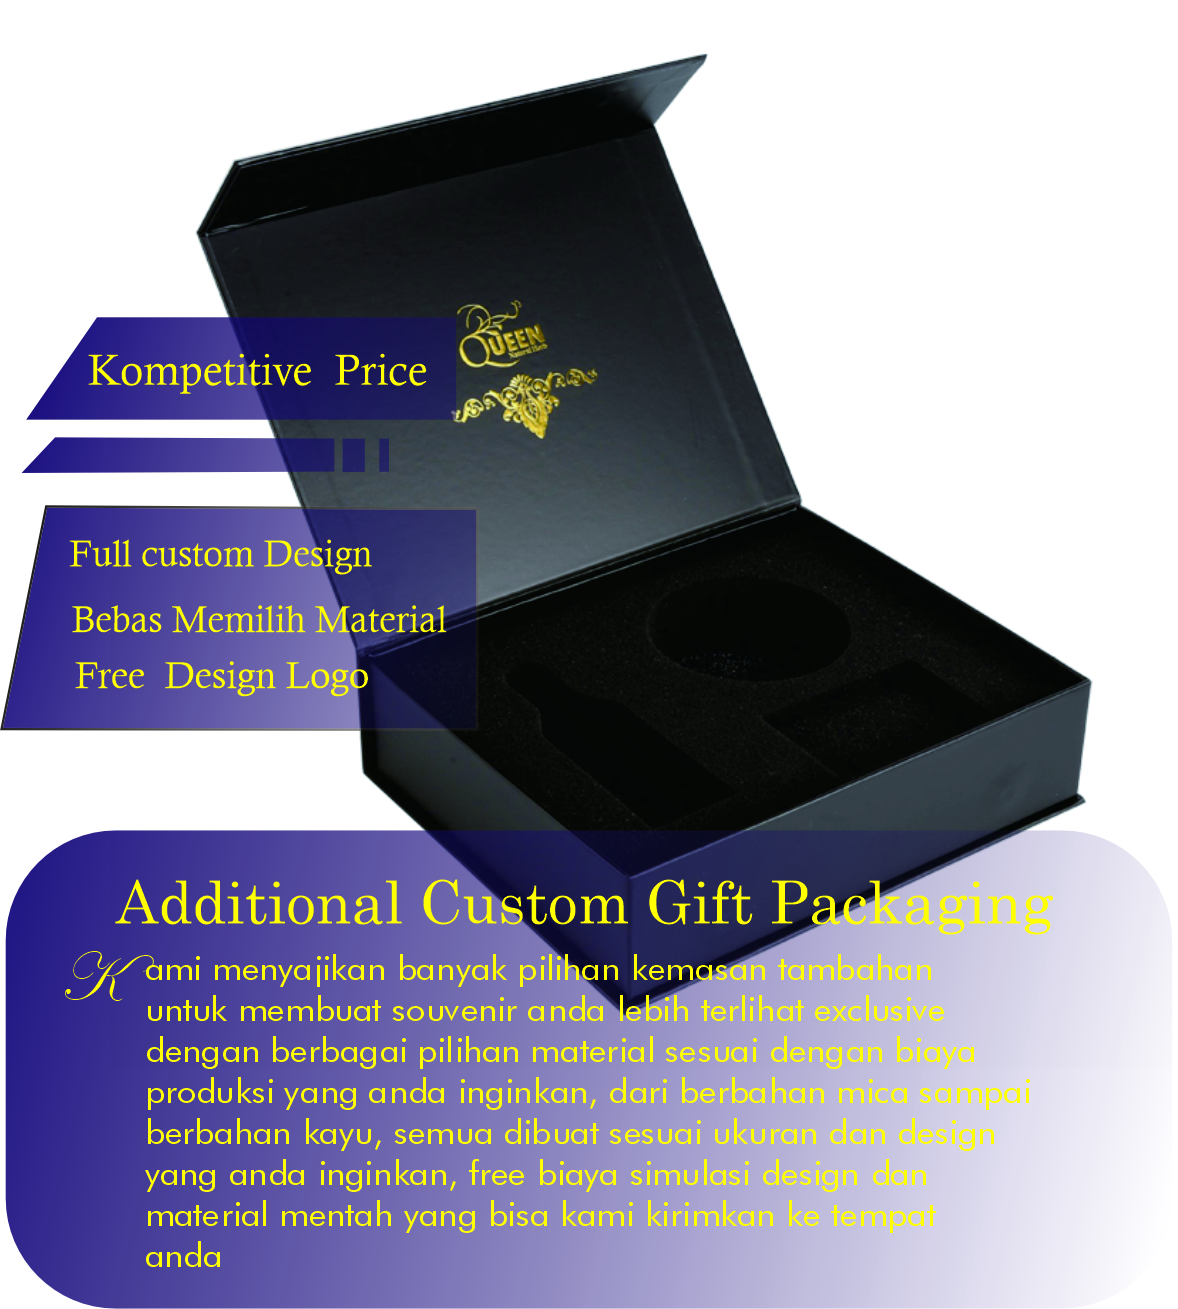 Informasi custom gift packaging